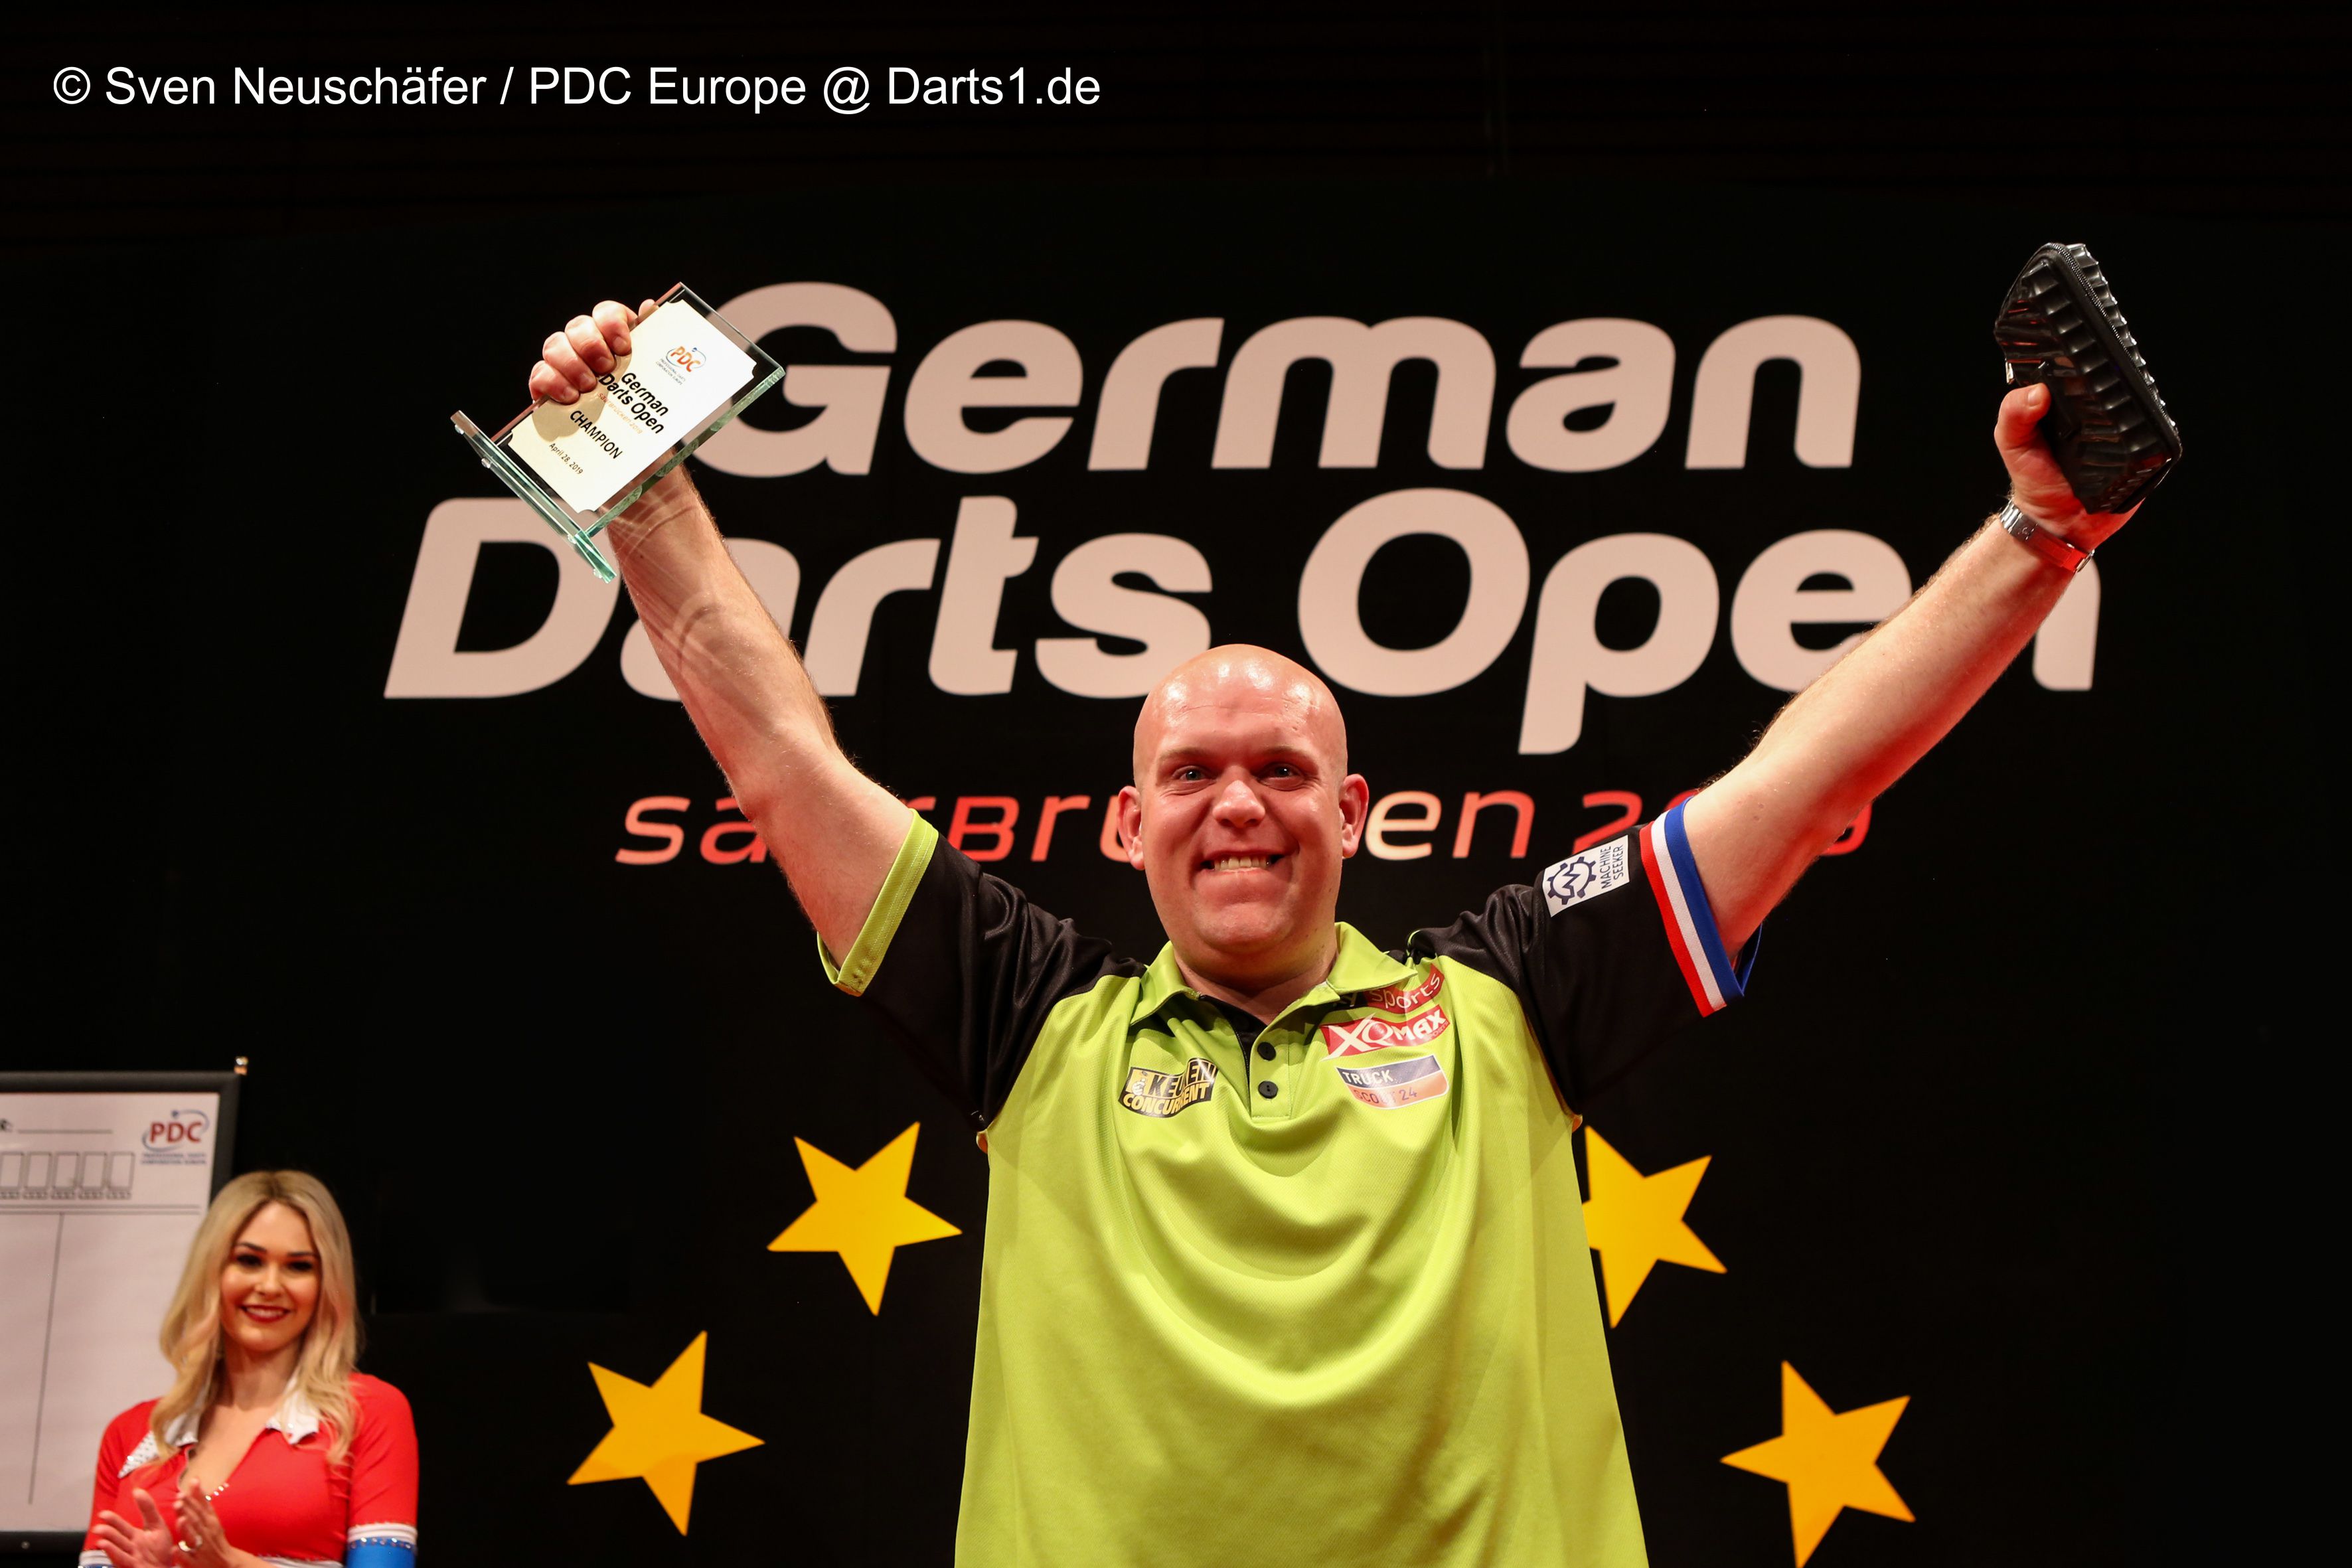 pdc european tour german darts championship